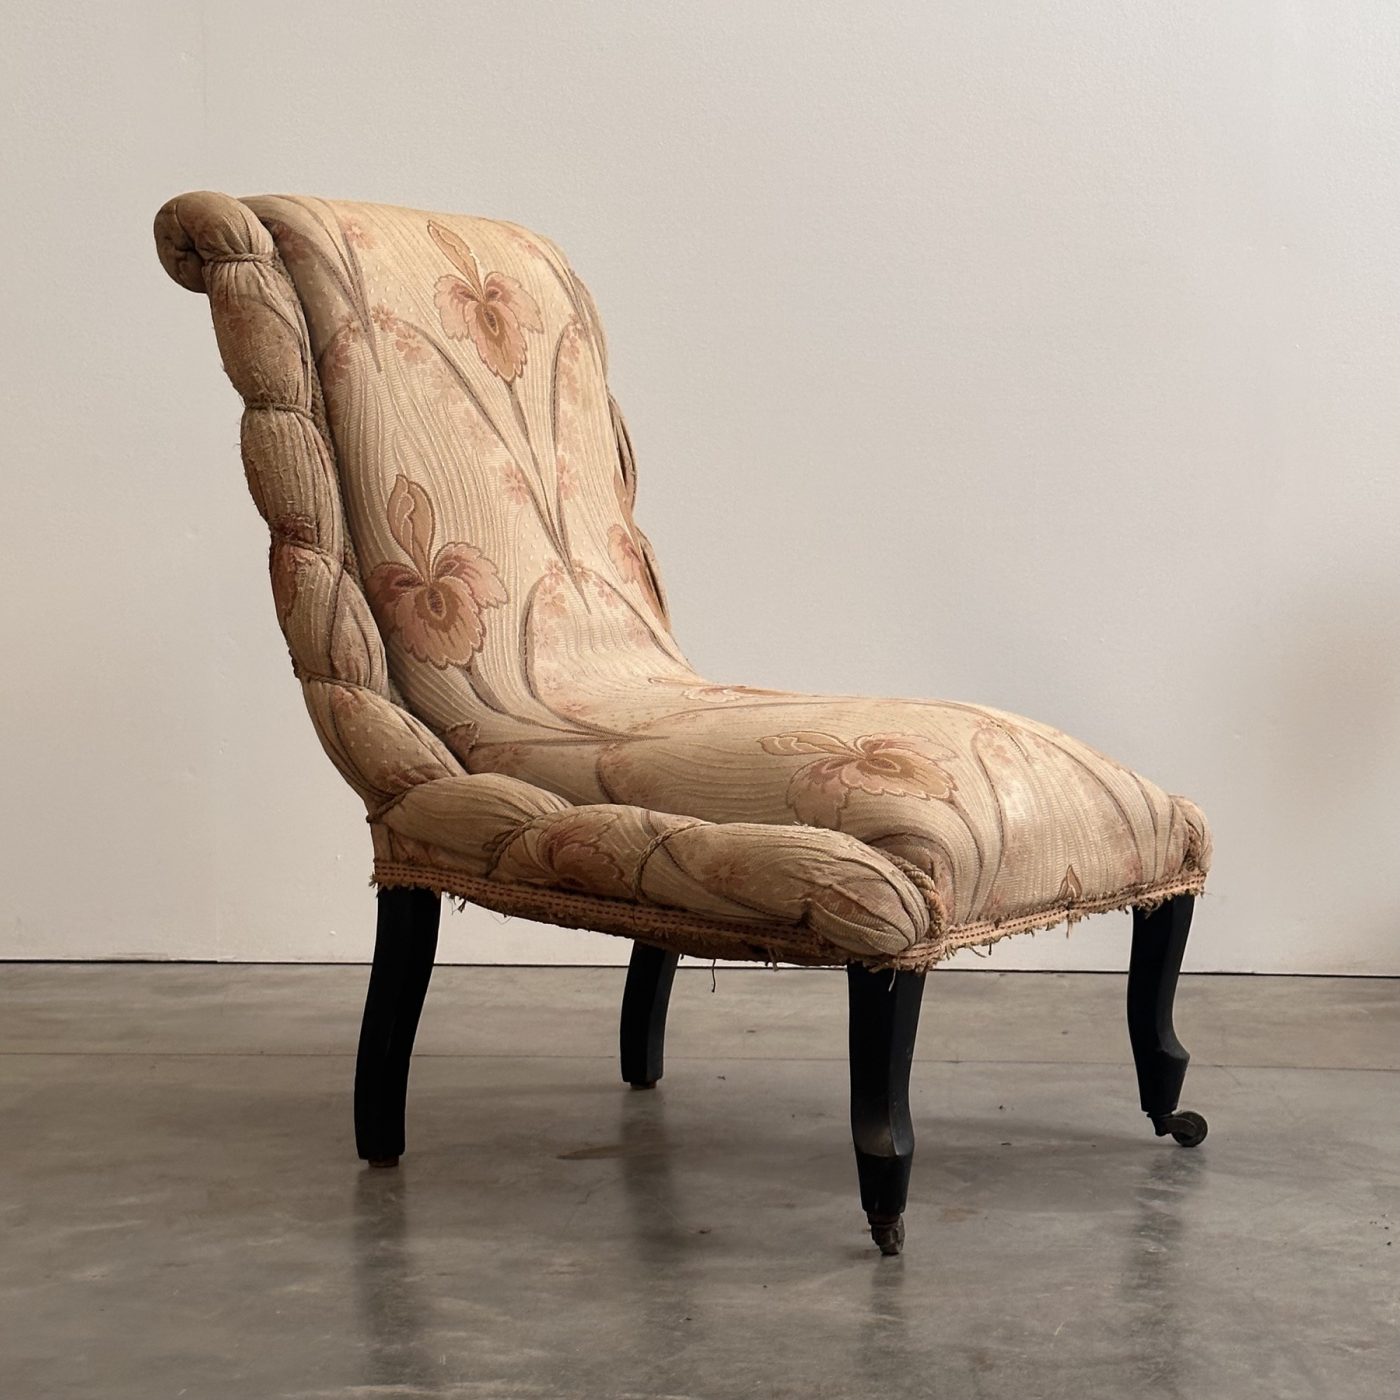 objet-vagabond-napoleon3-chair0002